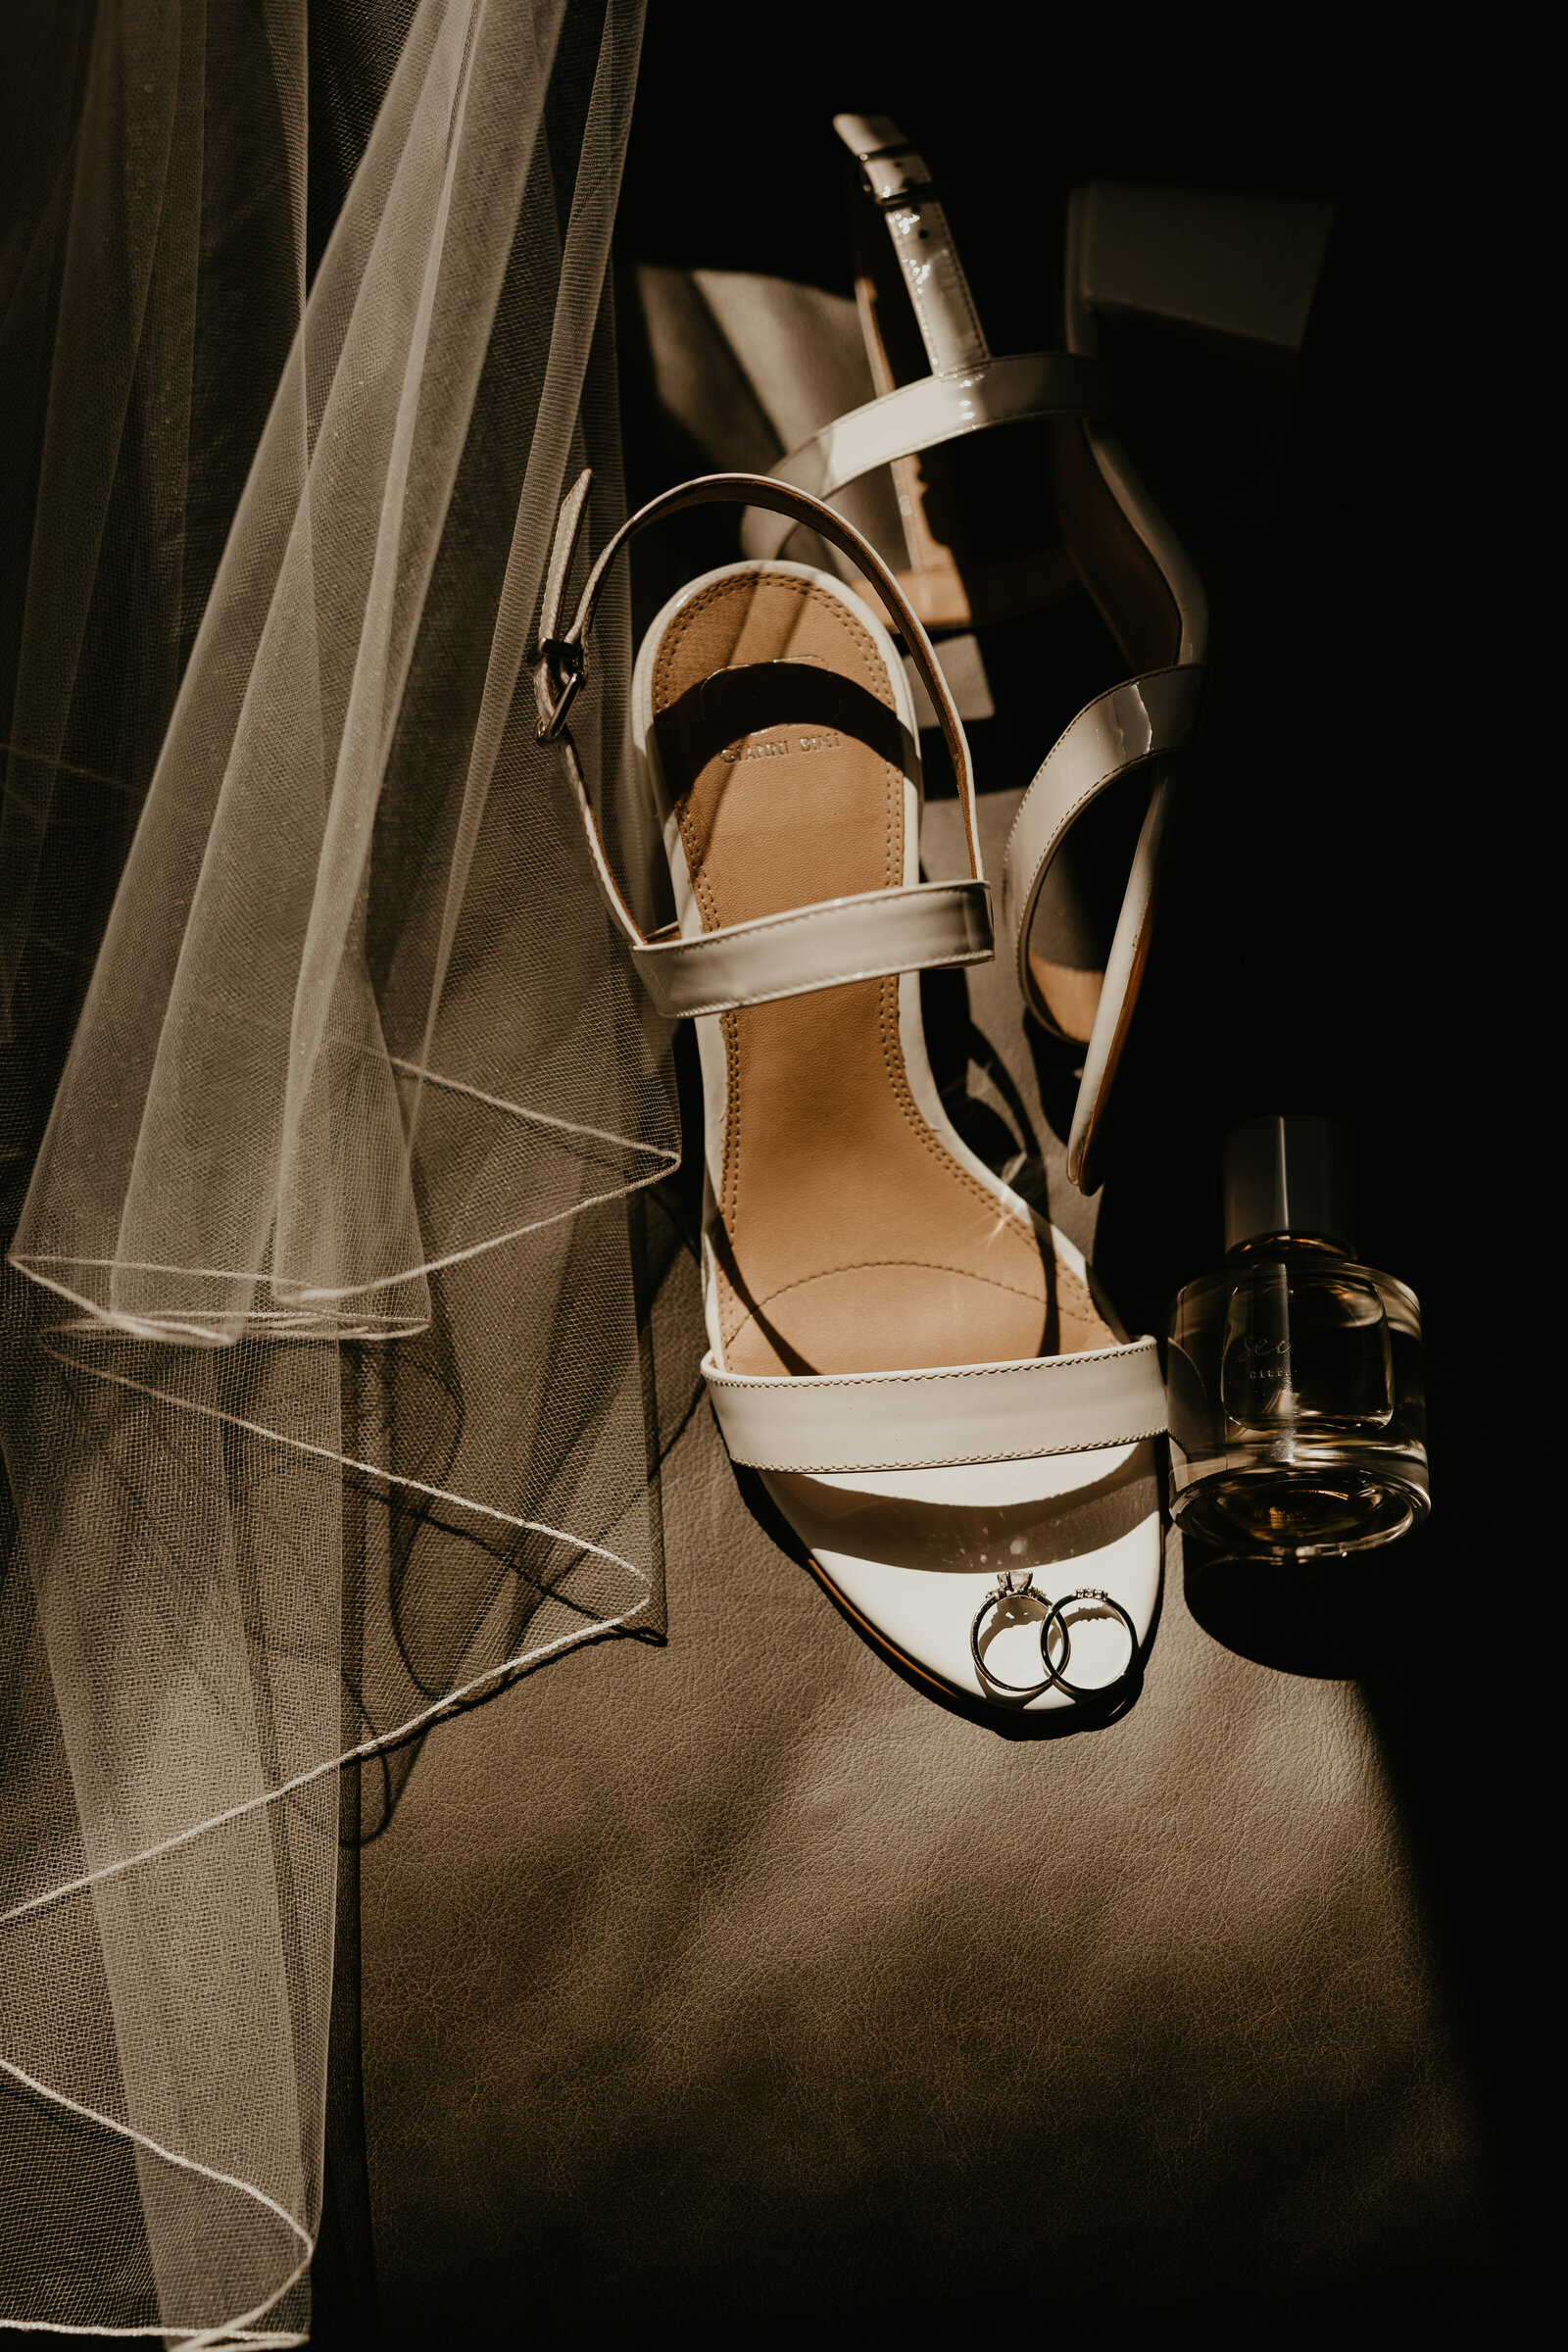 Wedding Veil , Shoes, Ring,  Details Photo Valley Center, KS